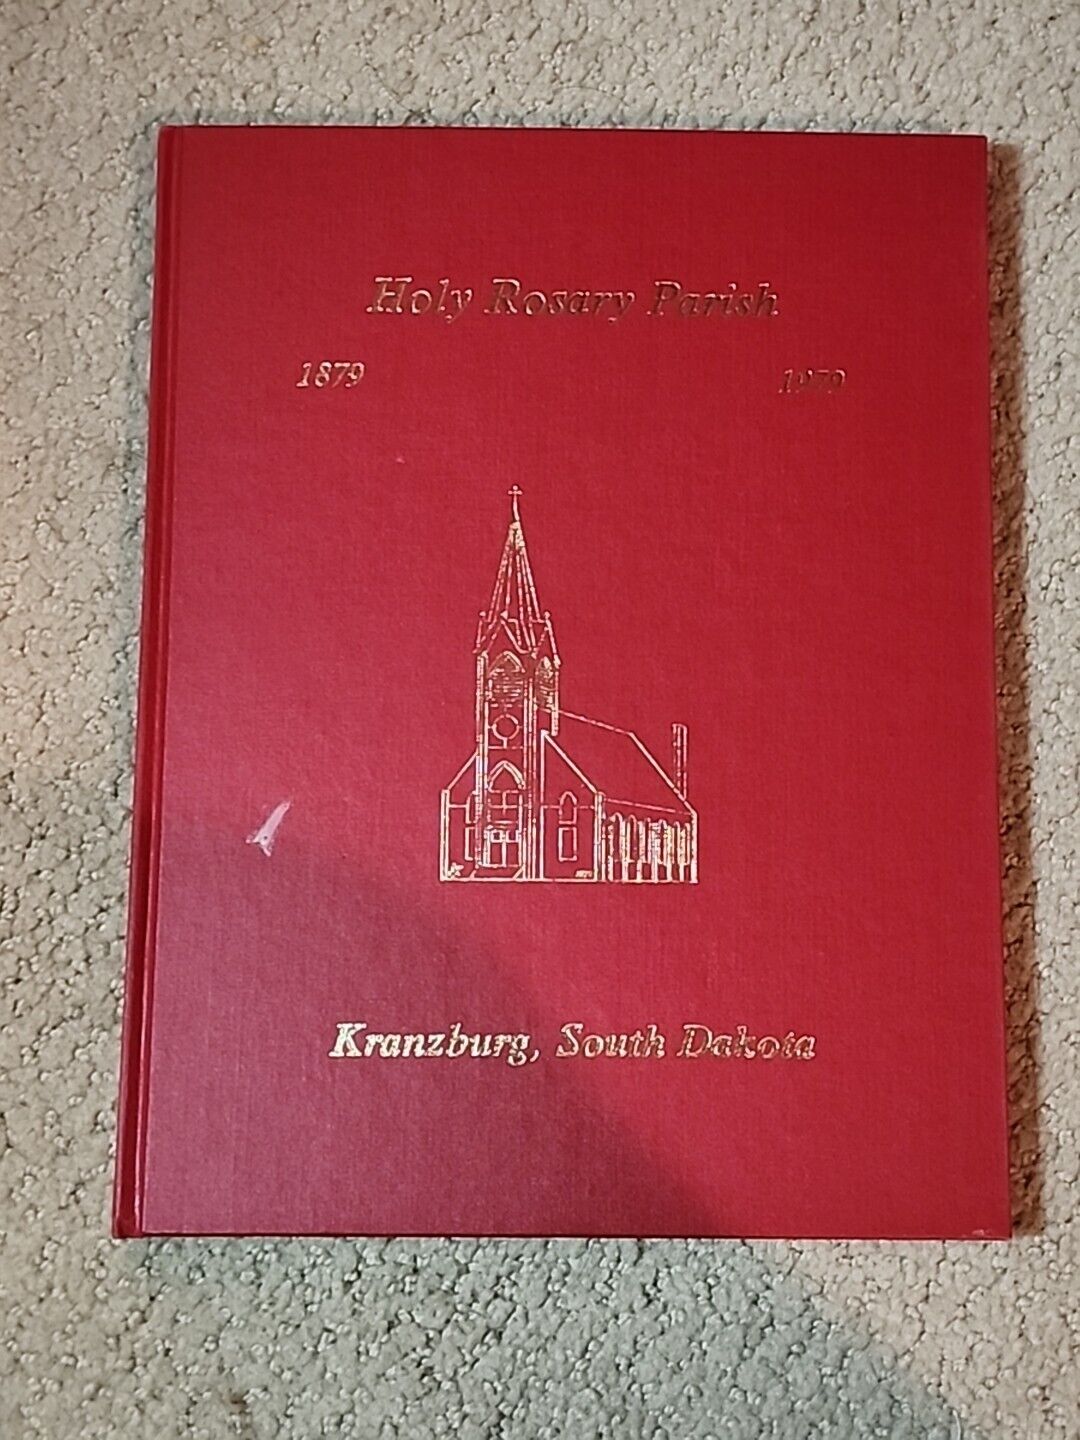 HOLY ROSARY PARISH-1879 to 1979-Kranzburg, South Dakota-book-Vintage-Popes